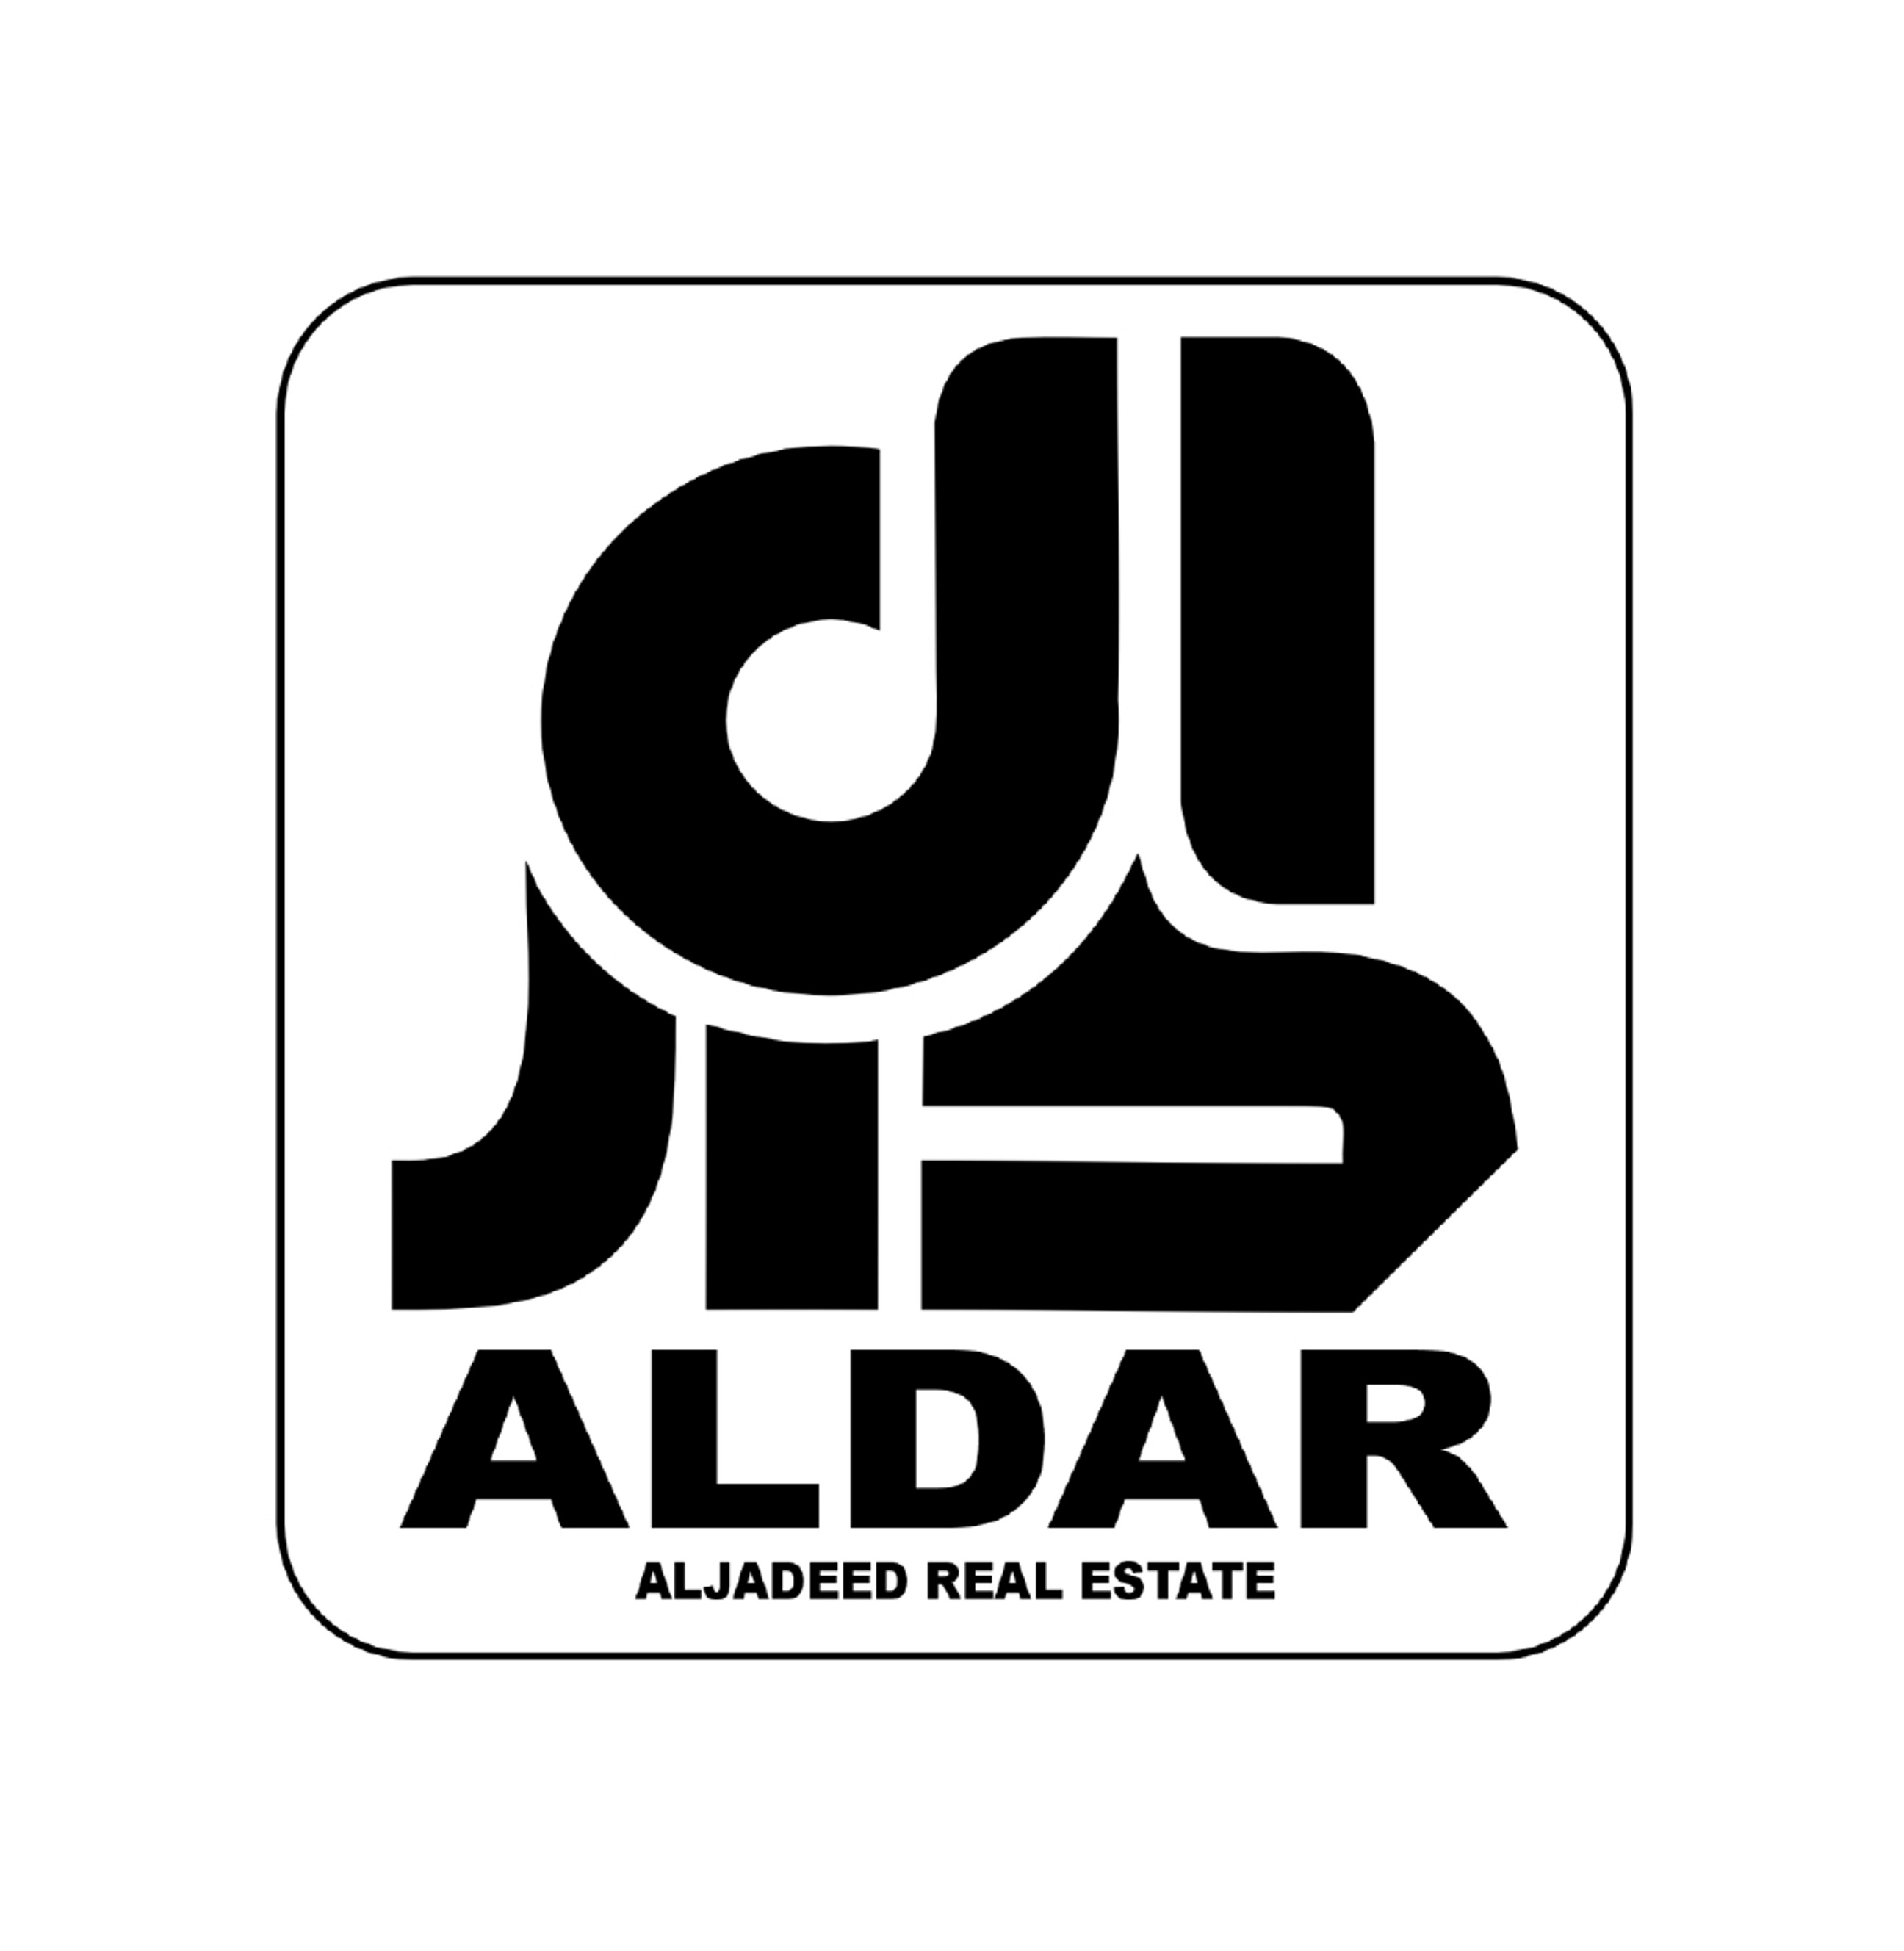 Al Dar Aljadeed Real Estate